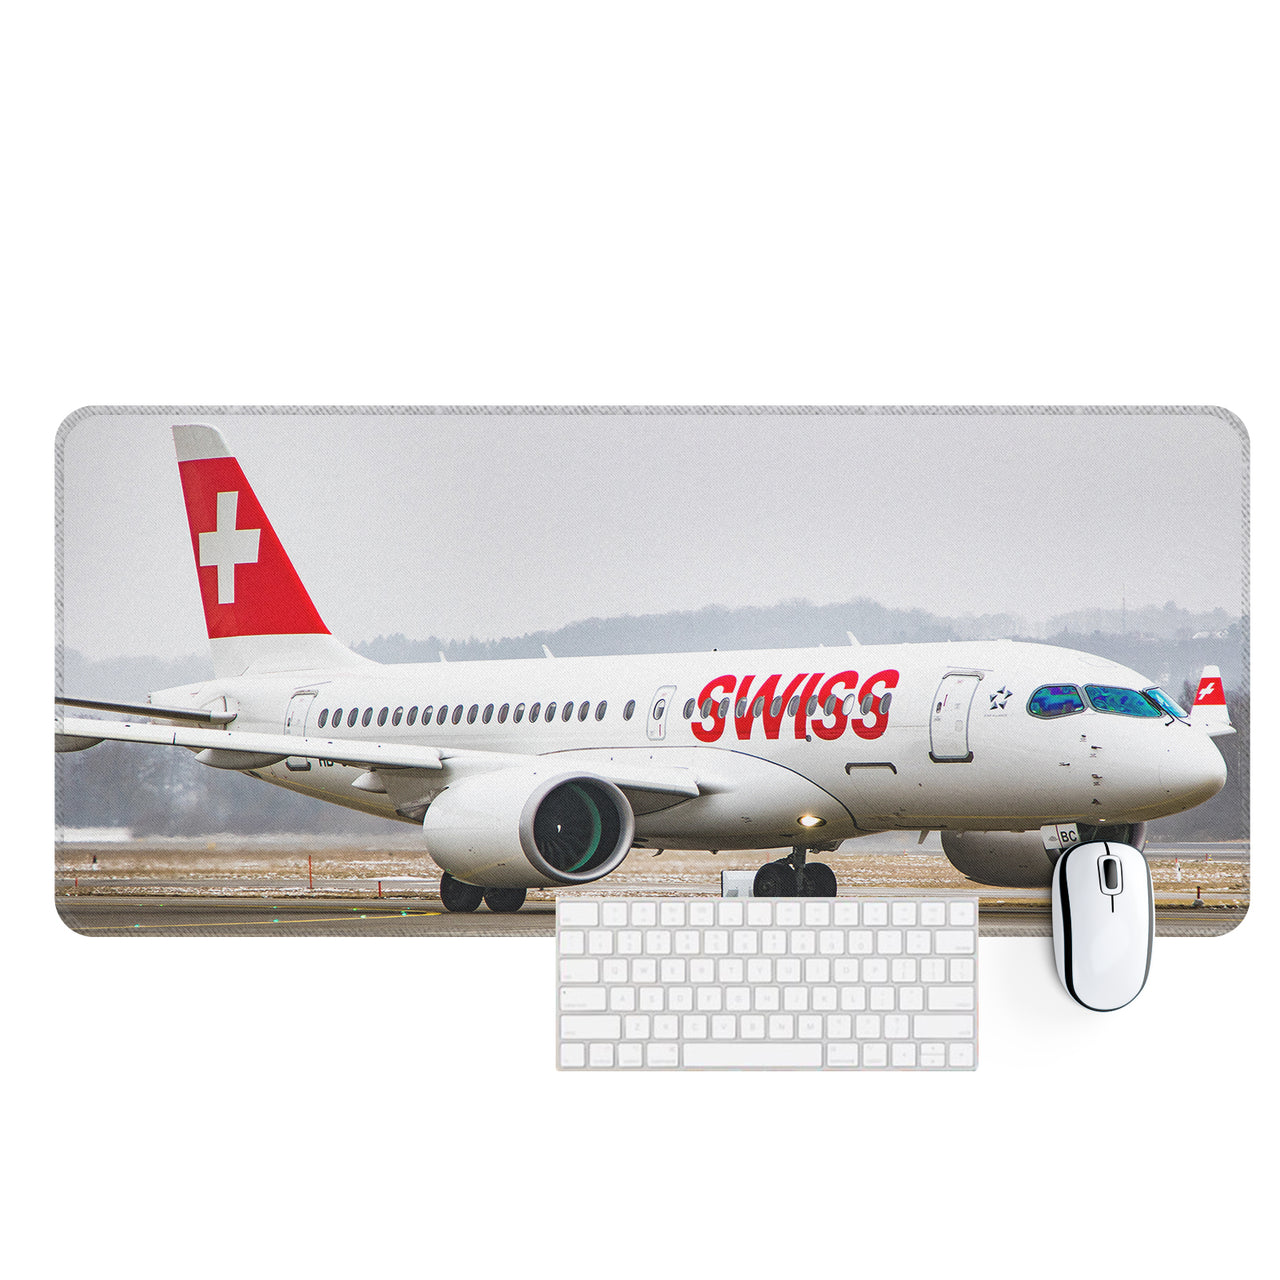 Swiss Airlines Bombardier CS100 Designed Desk Mats